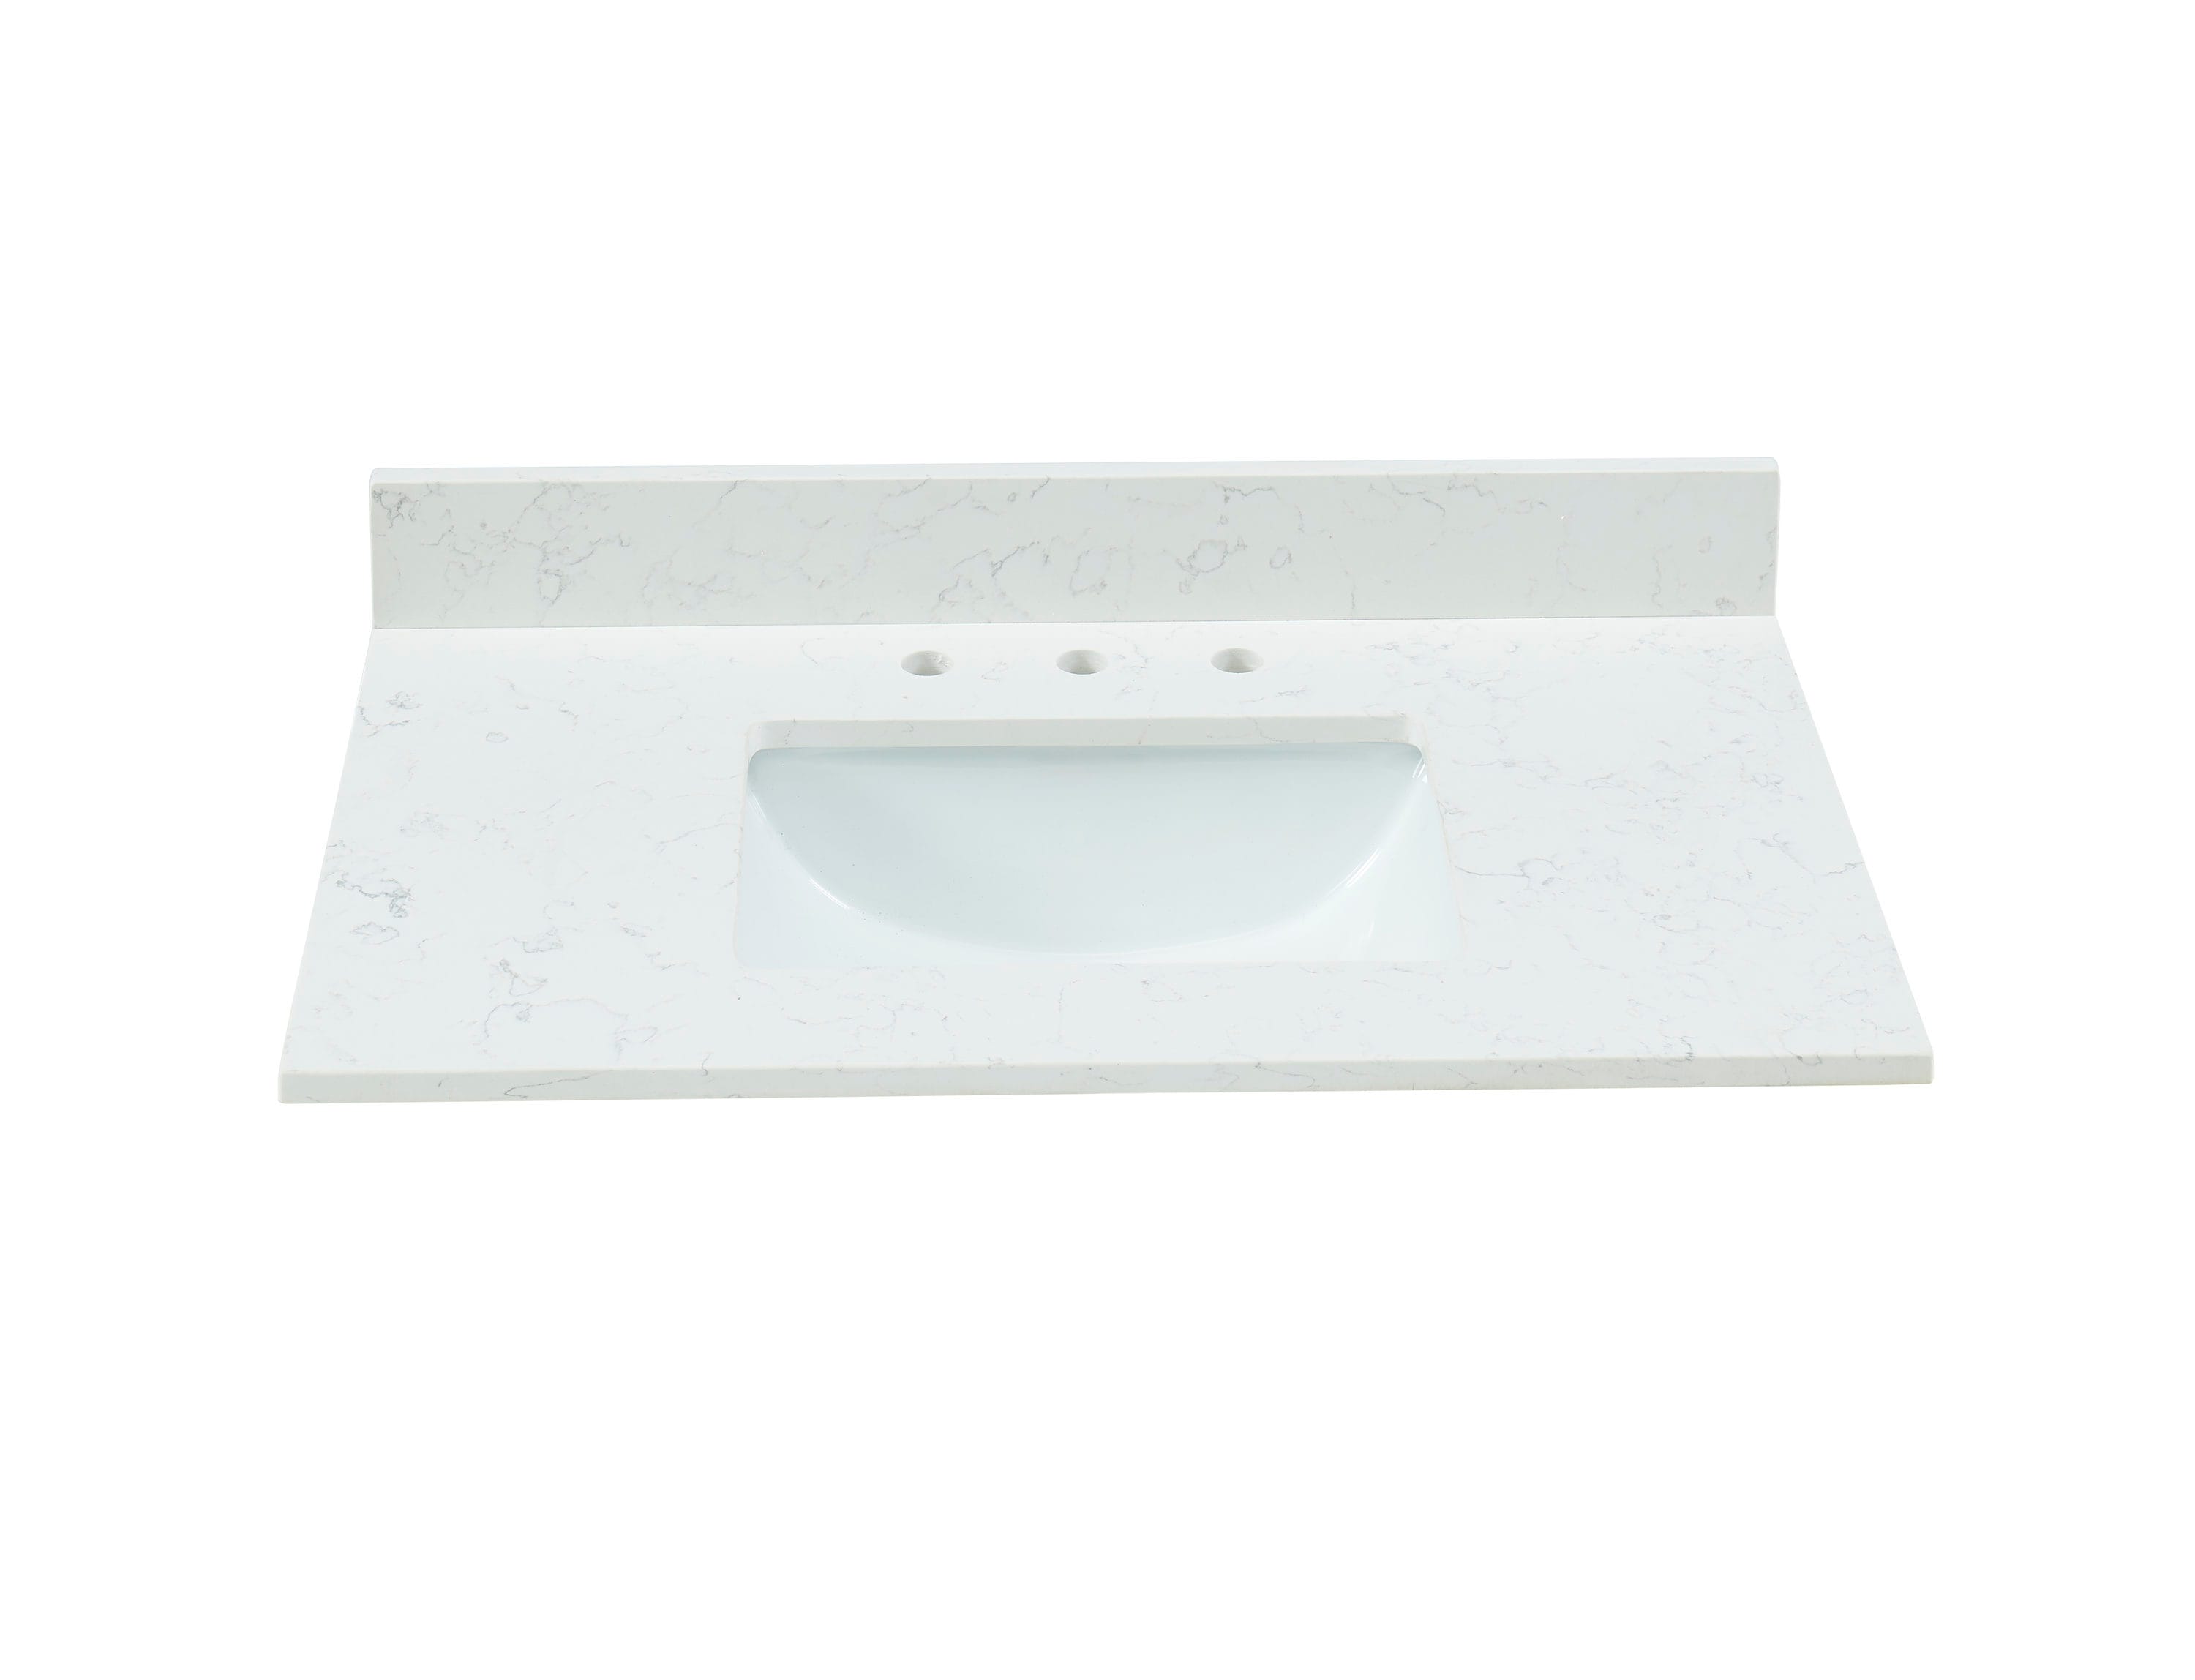 37-in Carrara White Quartz Undermount Single Sink Bathroom Vanity Top | - Bestview 261073